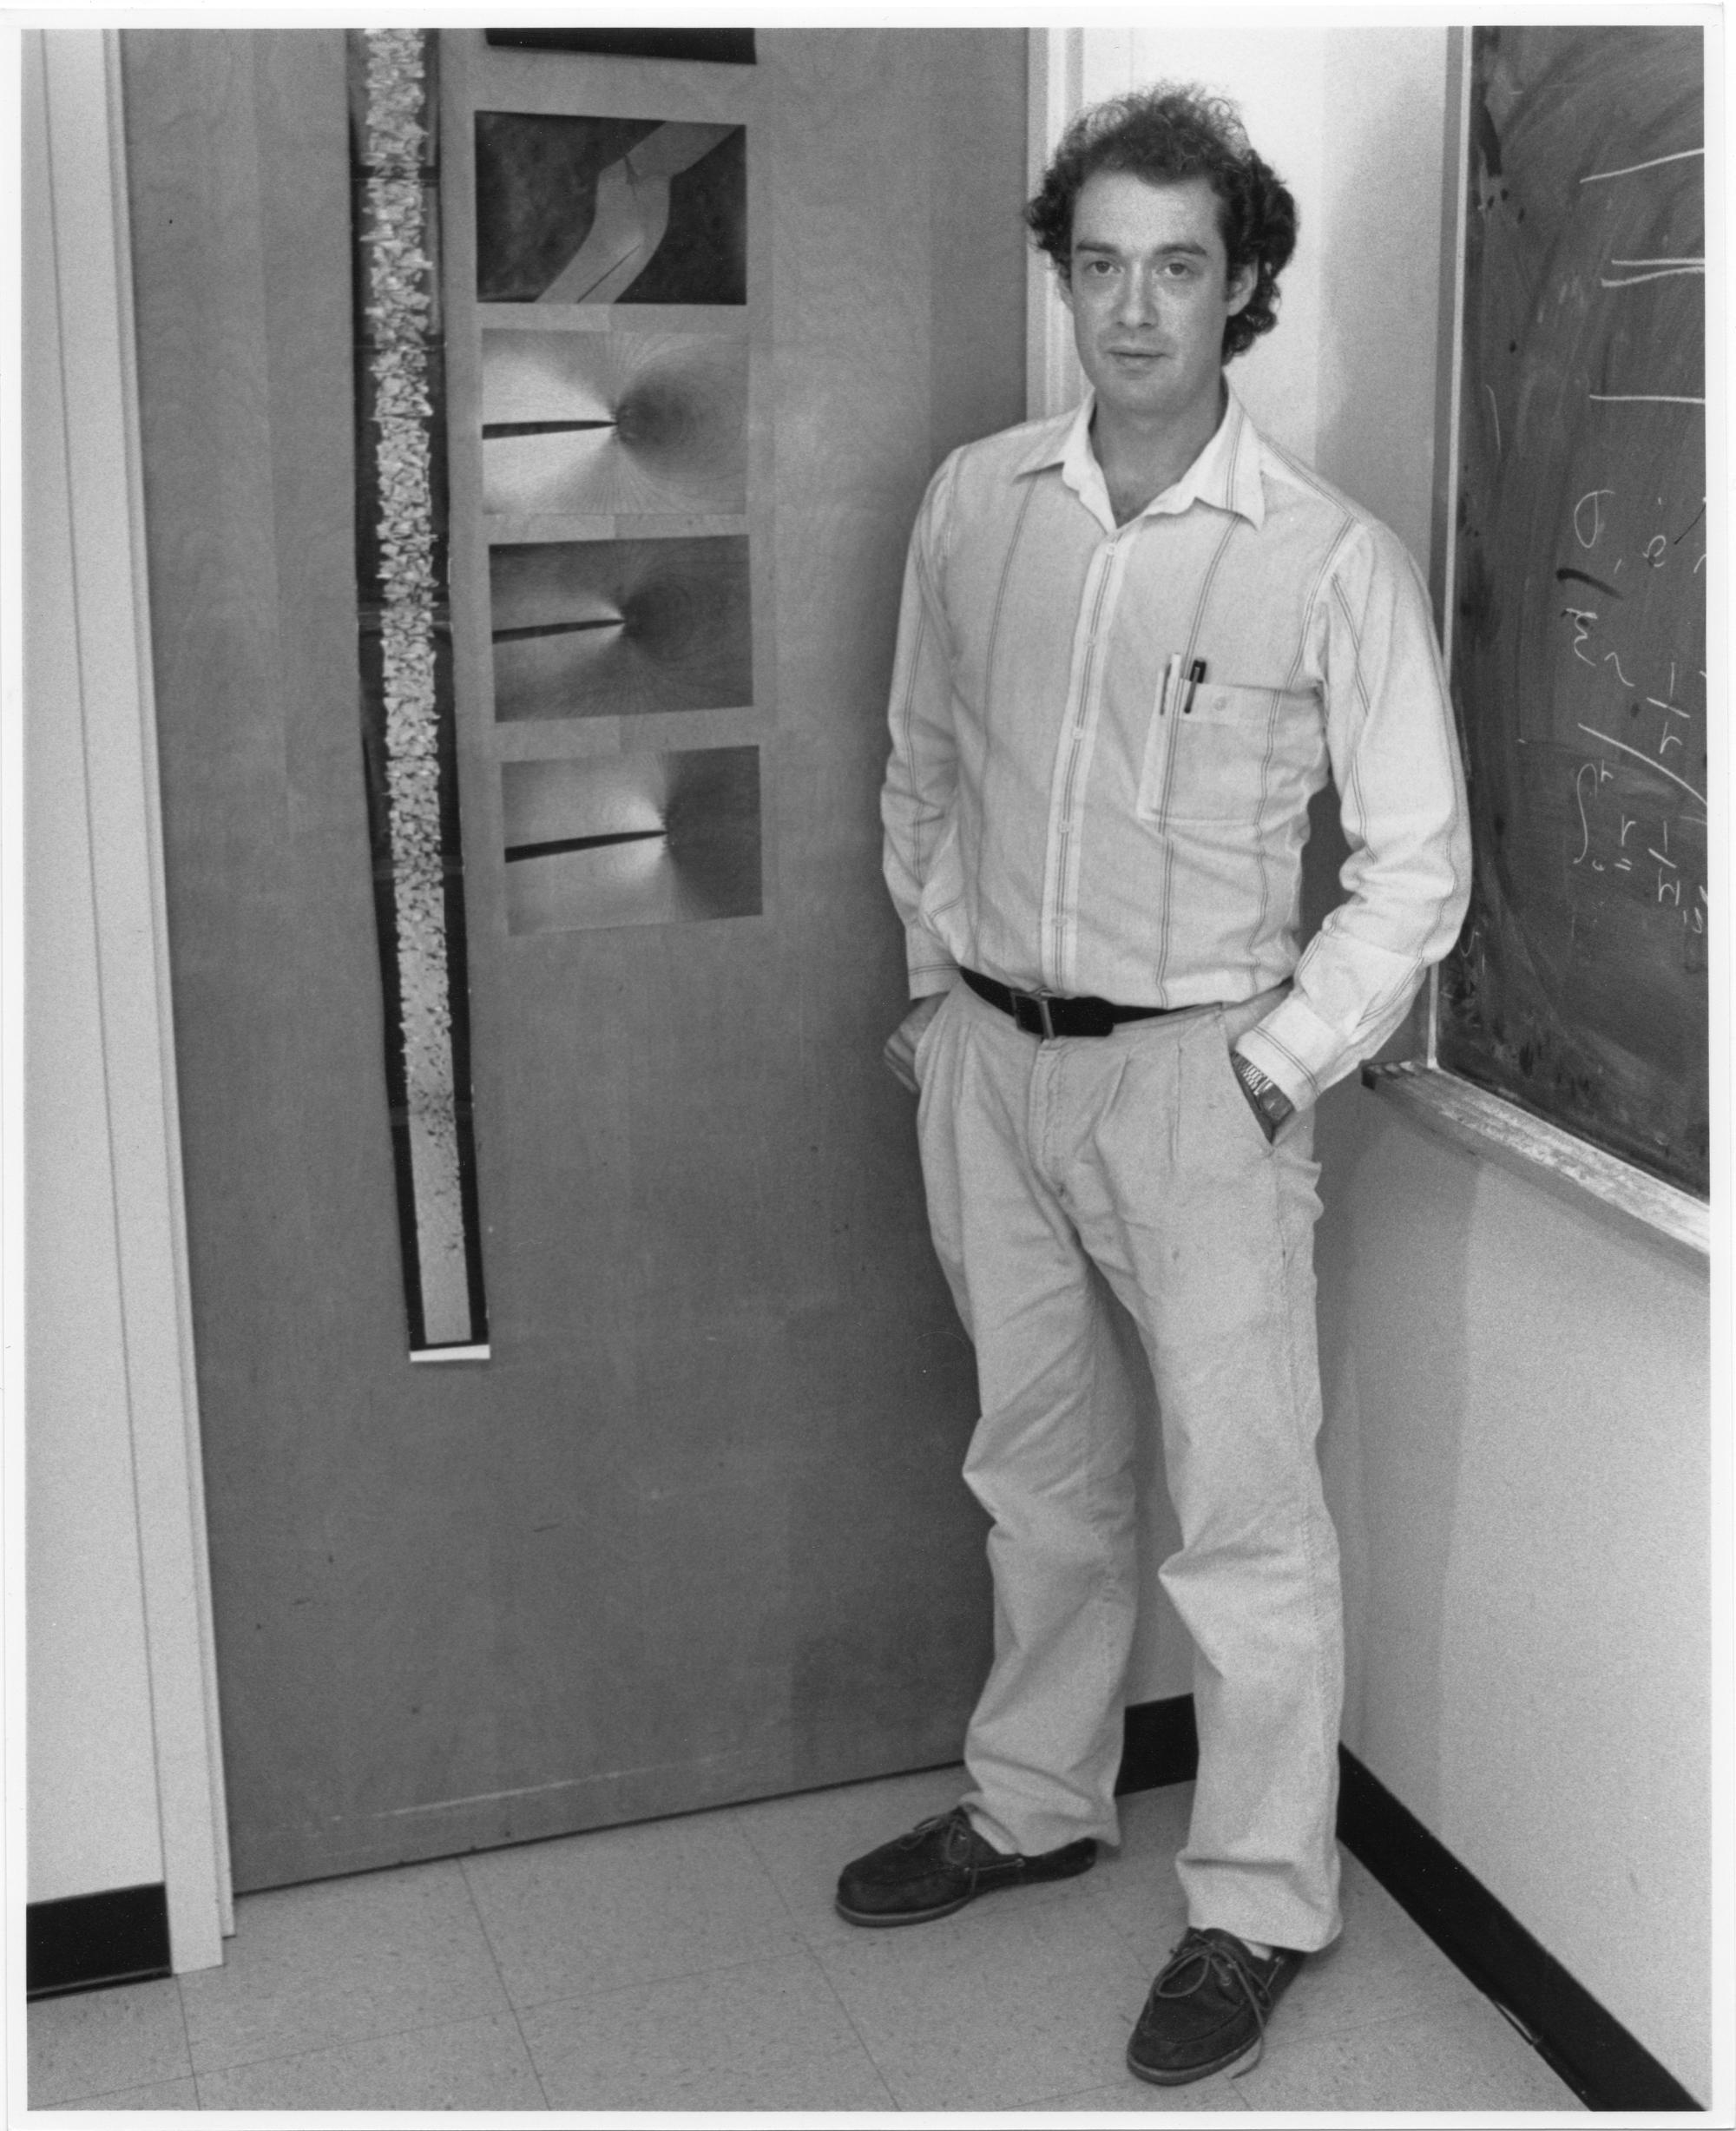 UT Austin Physics Dept (1990) - Michael Marder